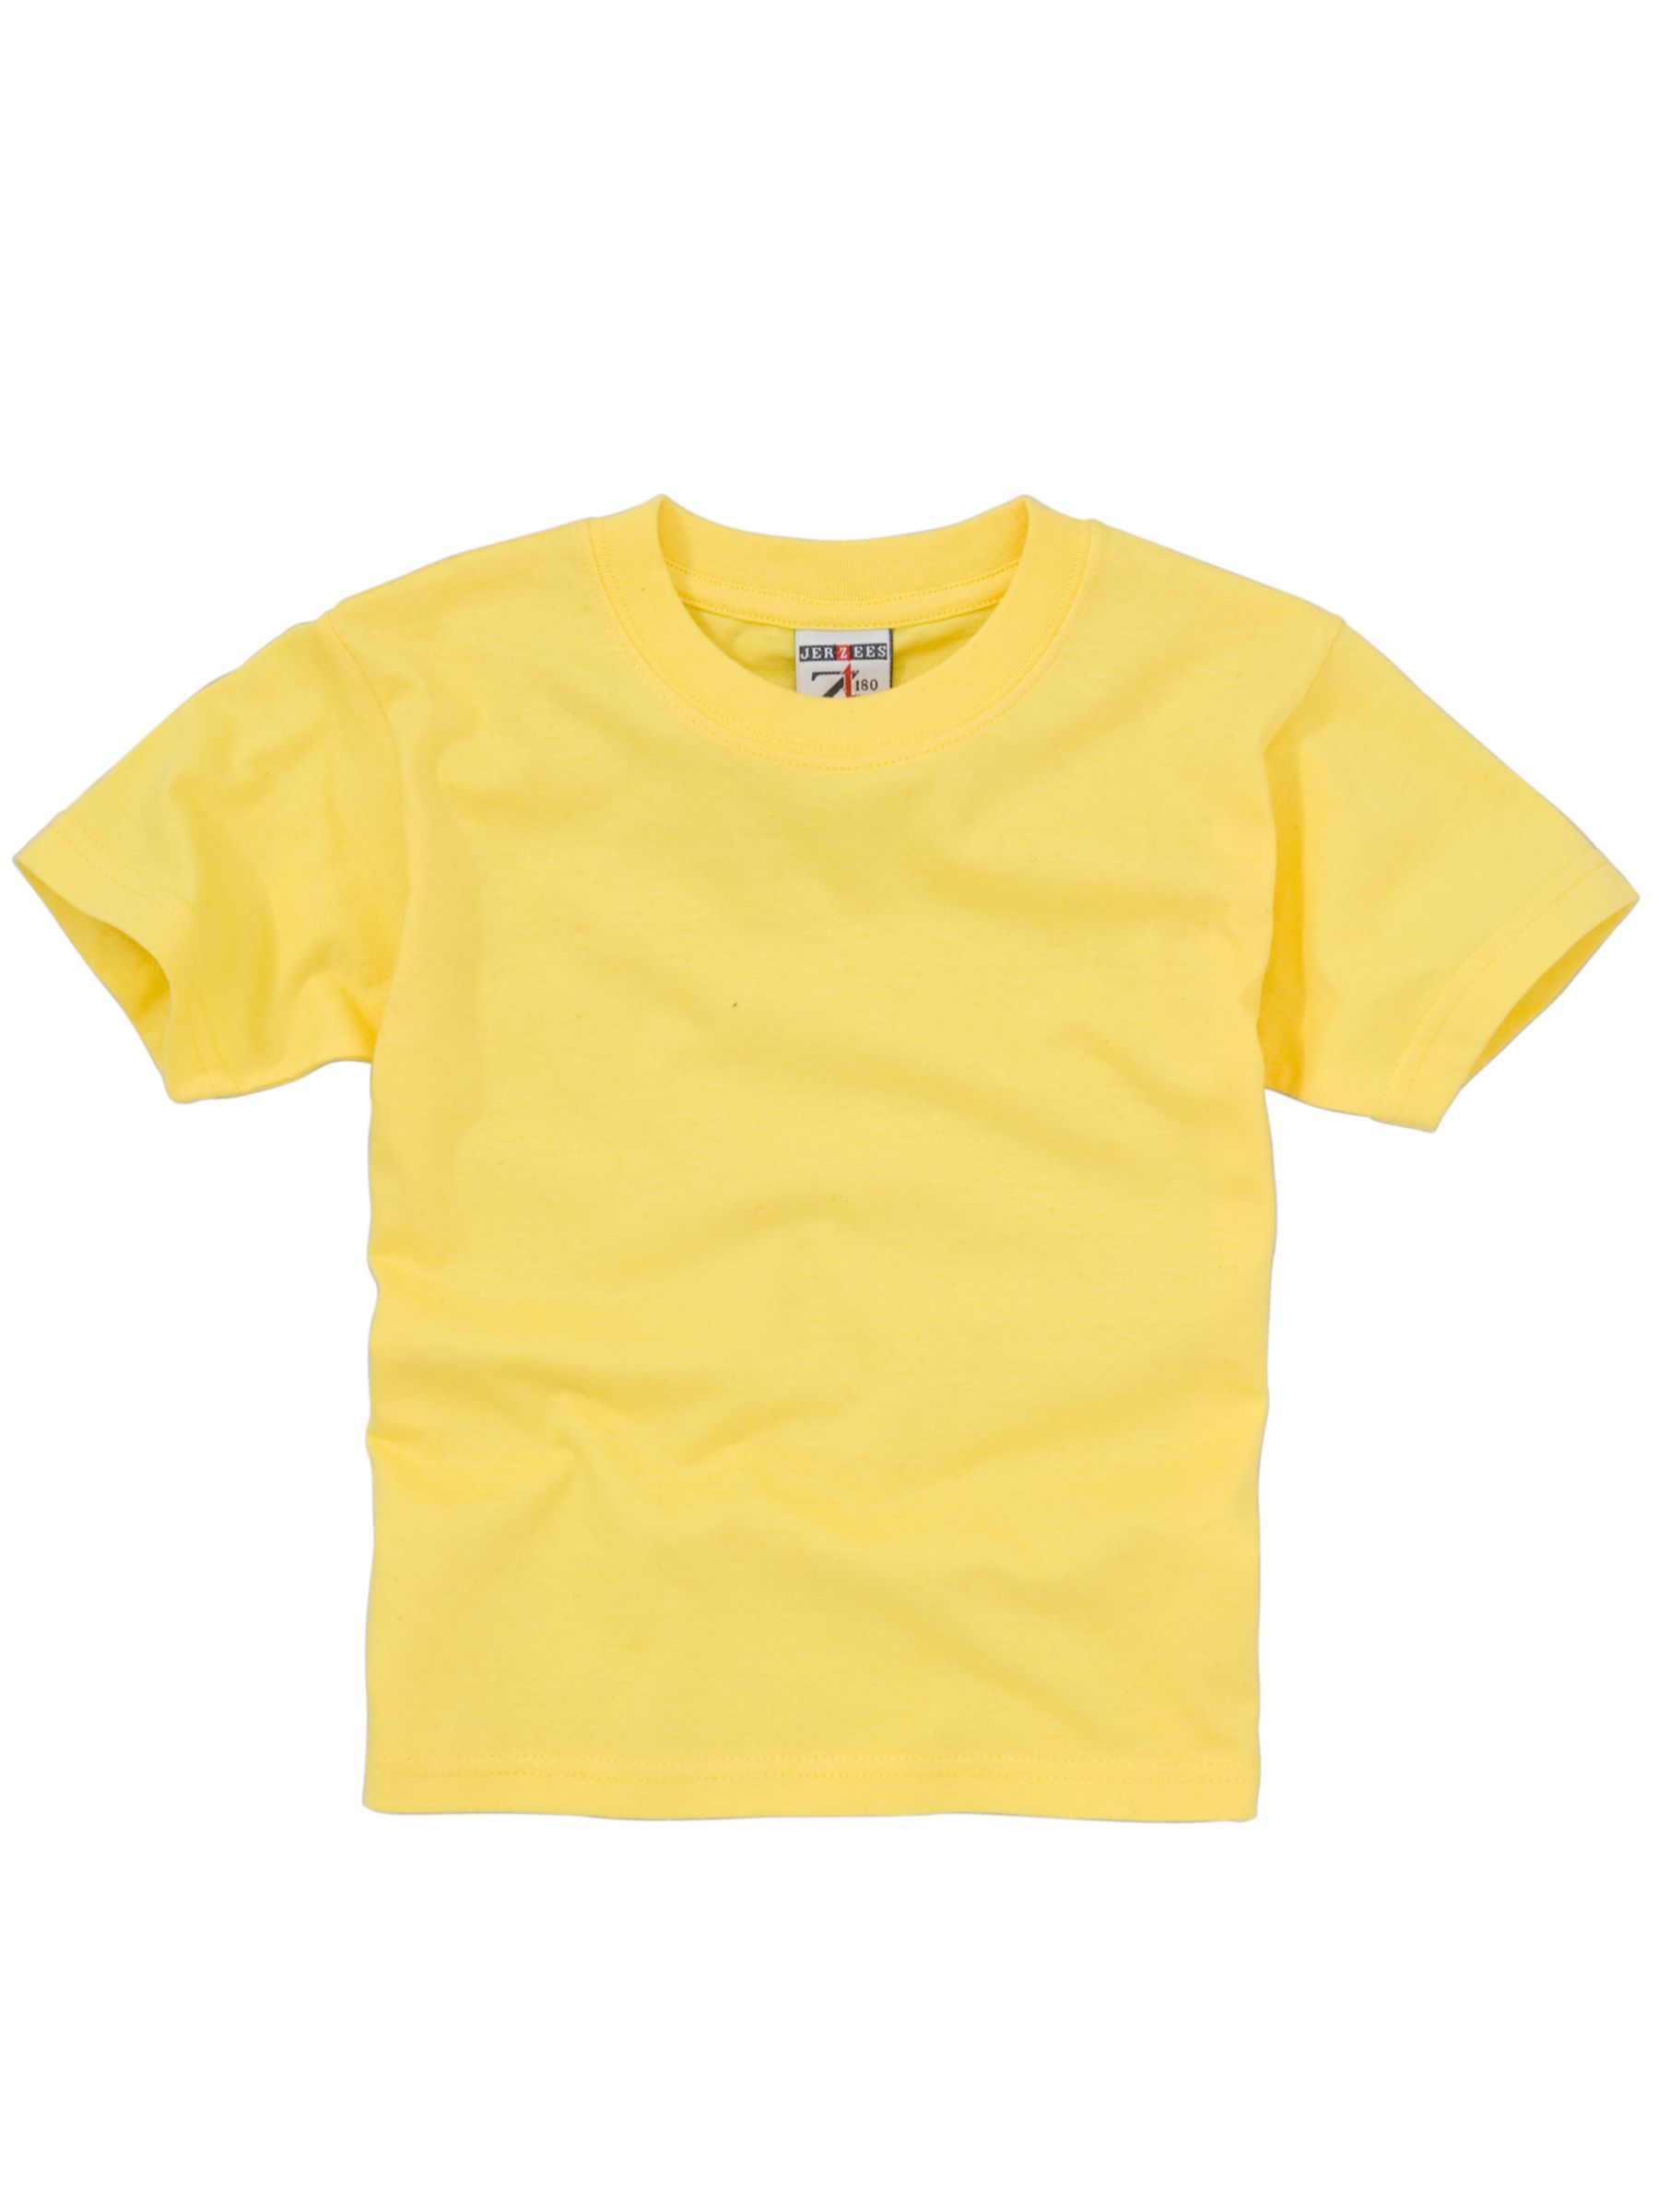 John Lewis Short Sleeve Crew Neck Unisex PE T-Shirt, Yellow